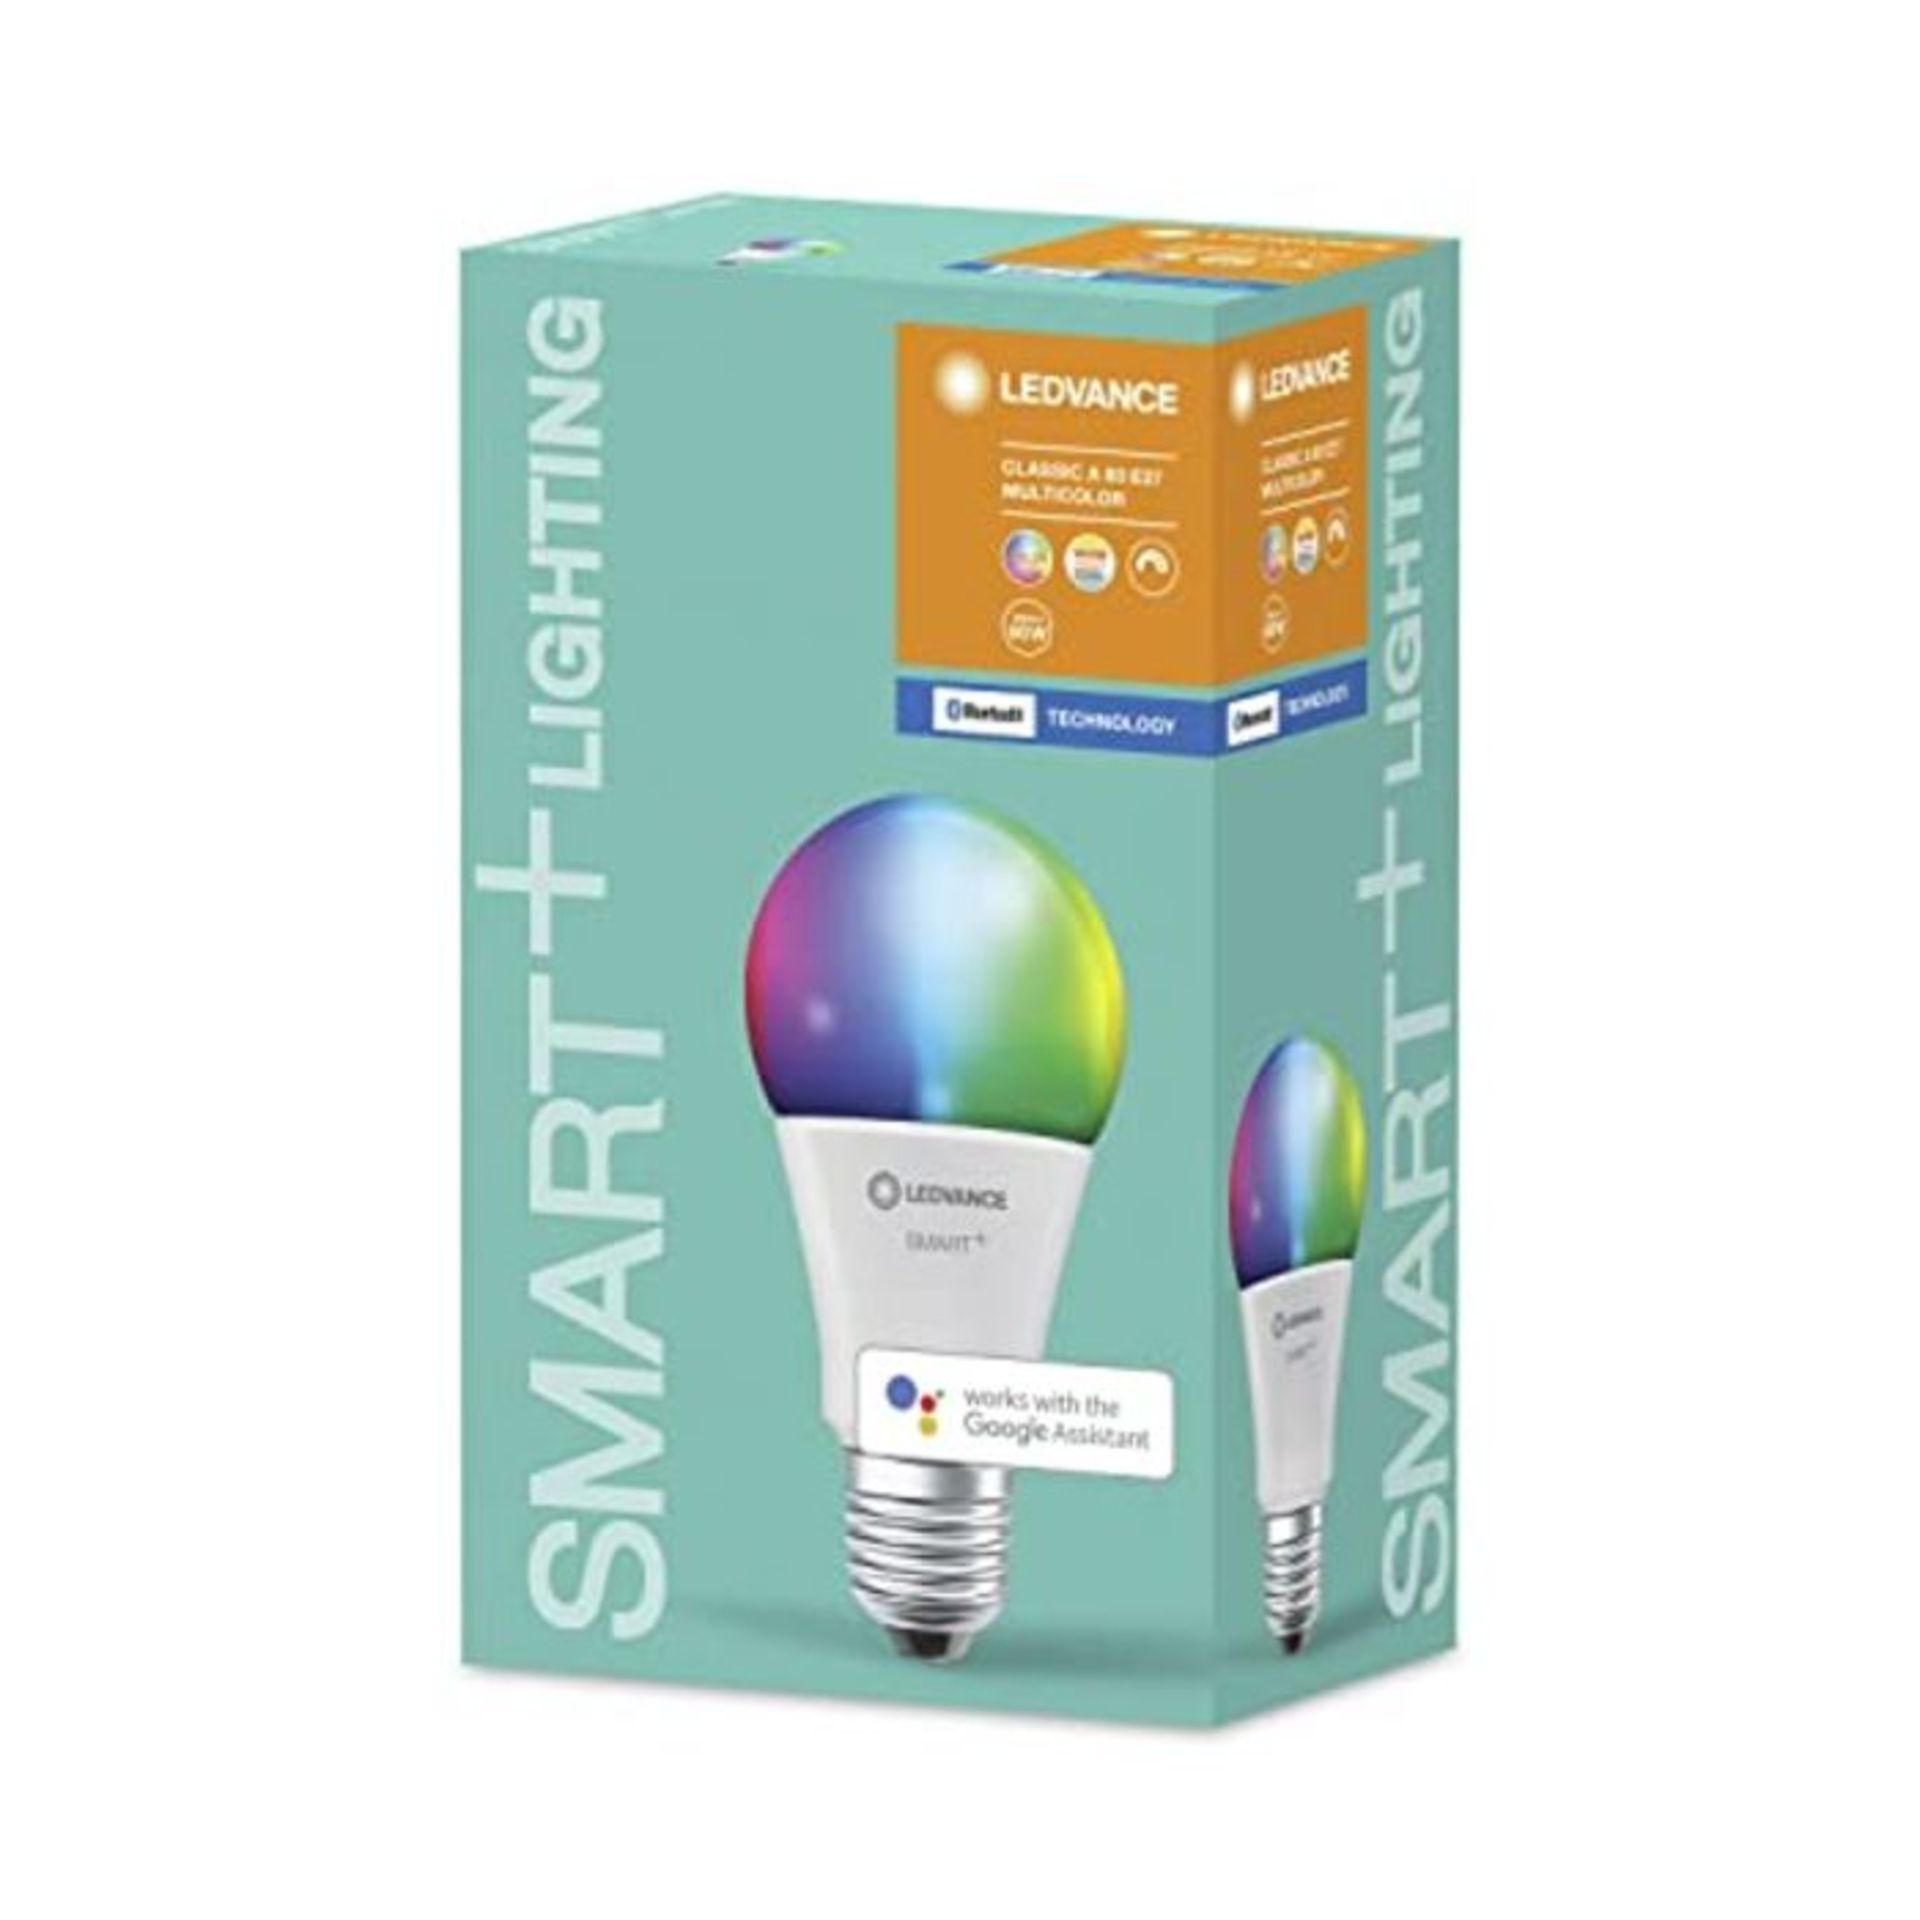 LEDVANCE Smart LED Lamp With Bluetooth Technology, E27 Socket, Changeable Light Color